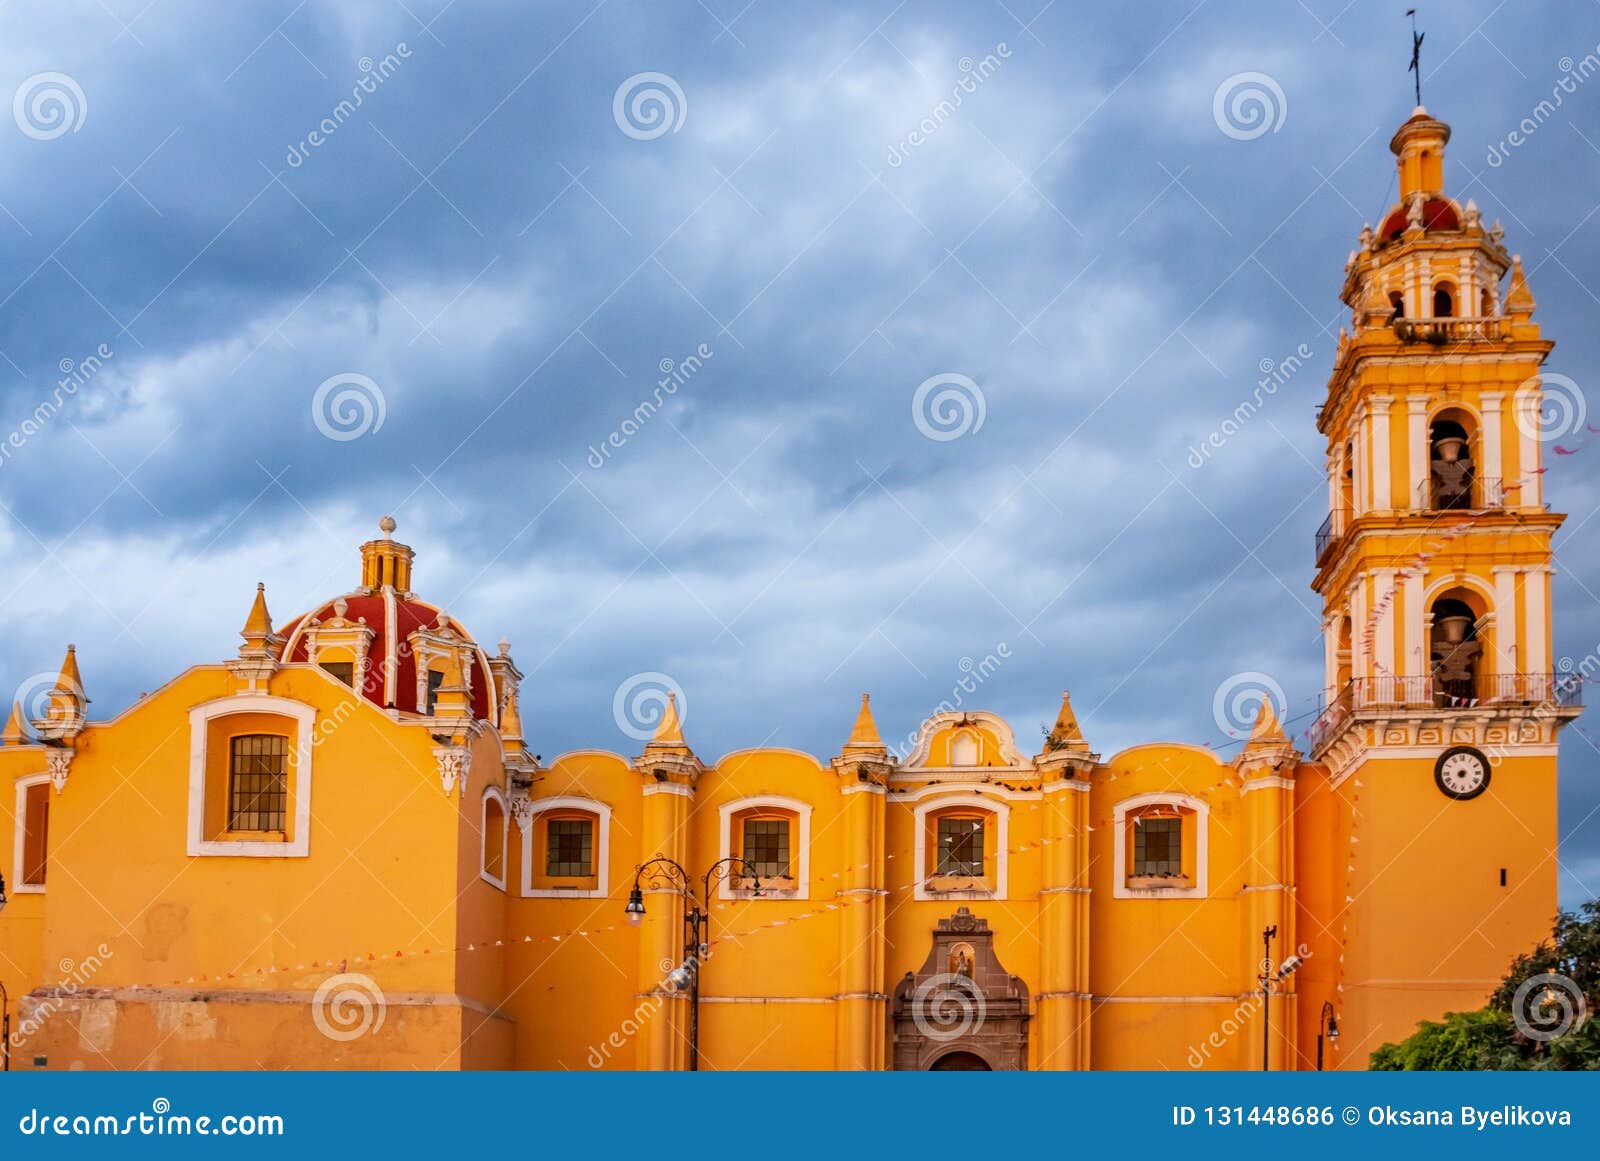 church of san pedro apostol in cholula, puebla, mexico